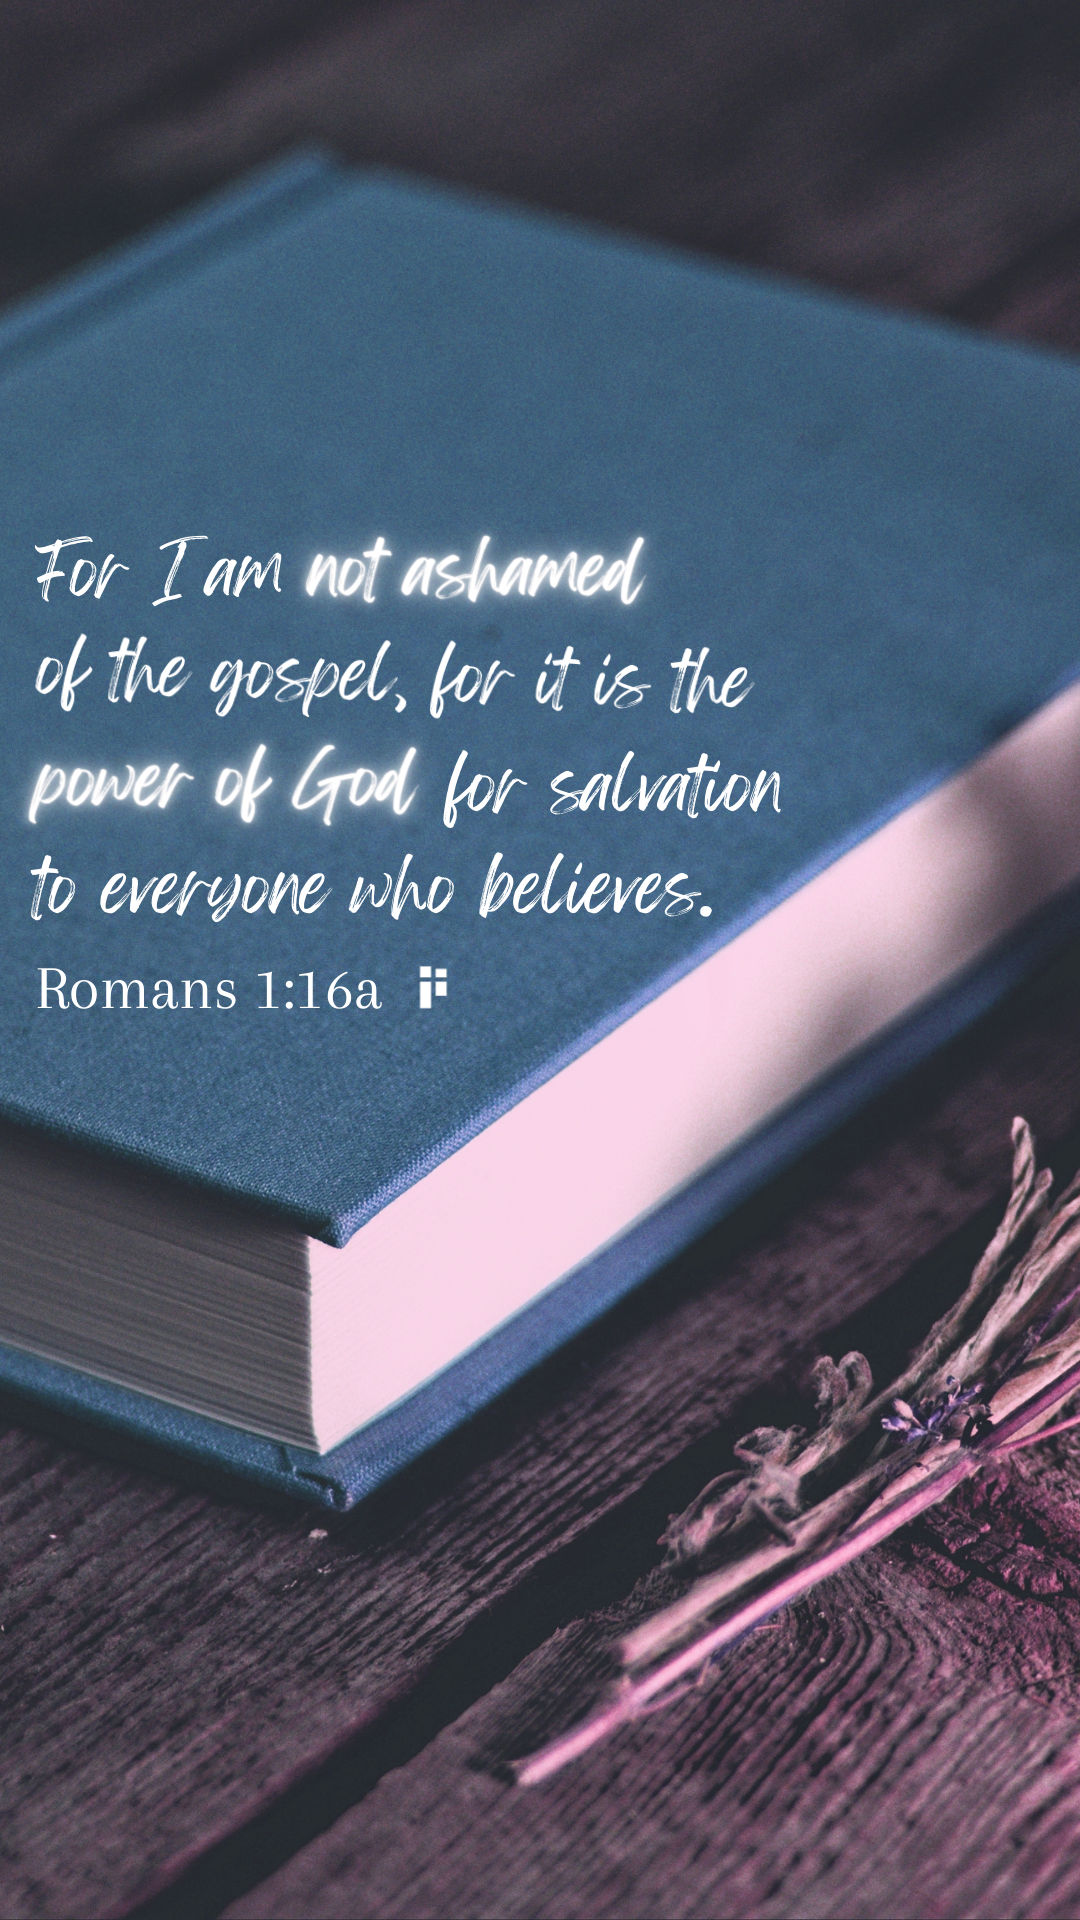 Romans 1:16